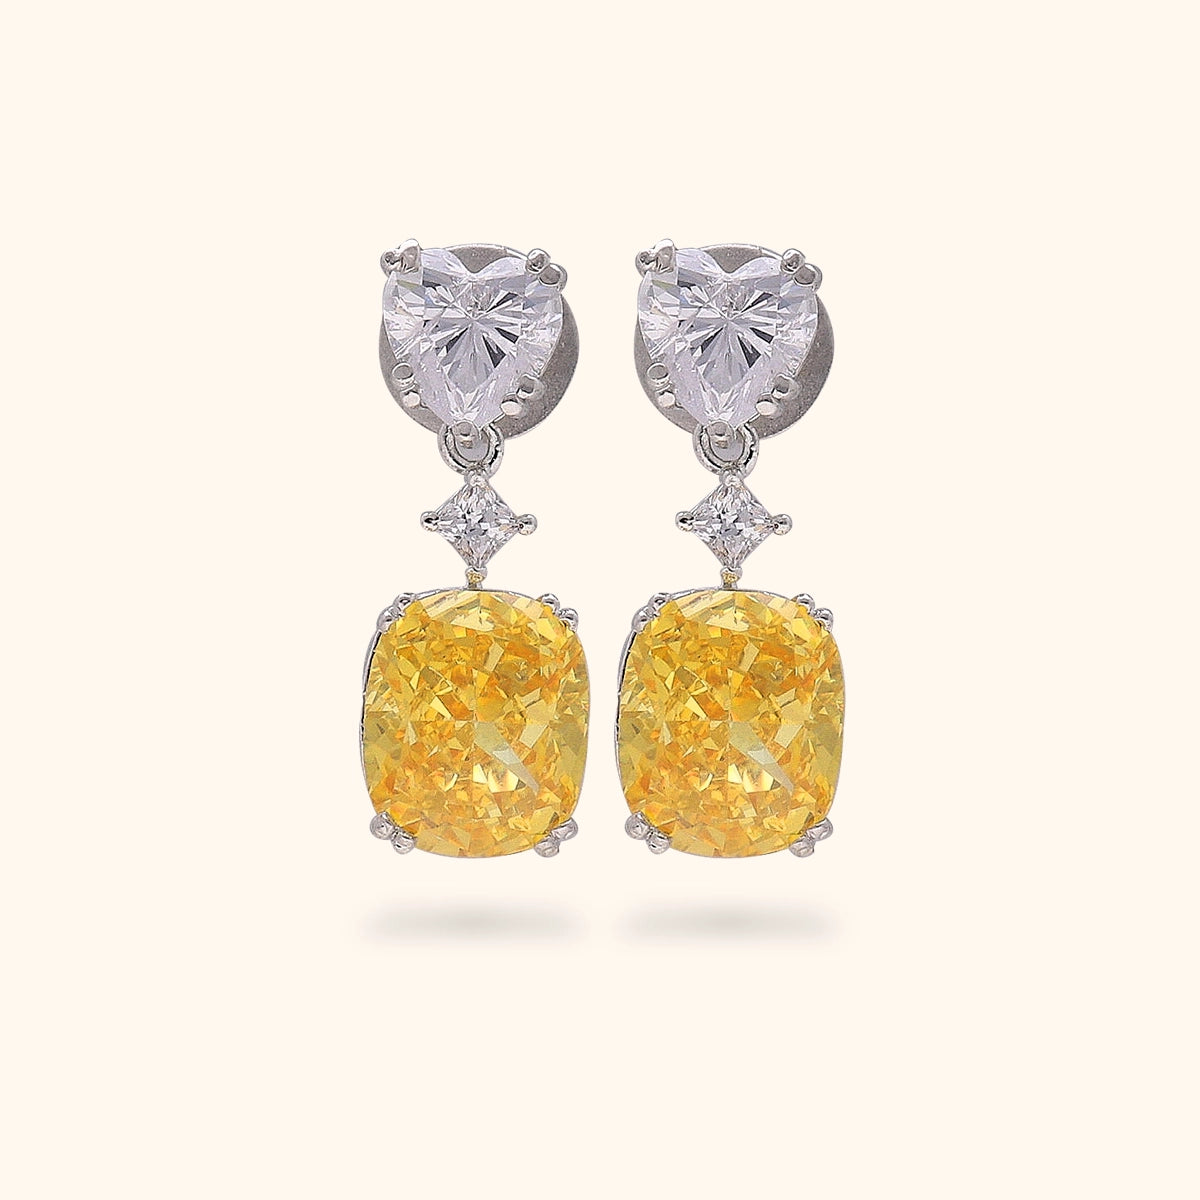 Amazon.com: Malanda 925 Sterling Silver Circle Drop Earrings for Women  Swarovski Crystal Hook Dangle Earrings Birthday Jewelry Gift for Mom  (Crystal Aurora Borealis): Clothing, Shoes & Jewelry